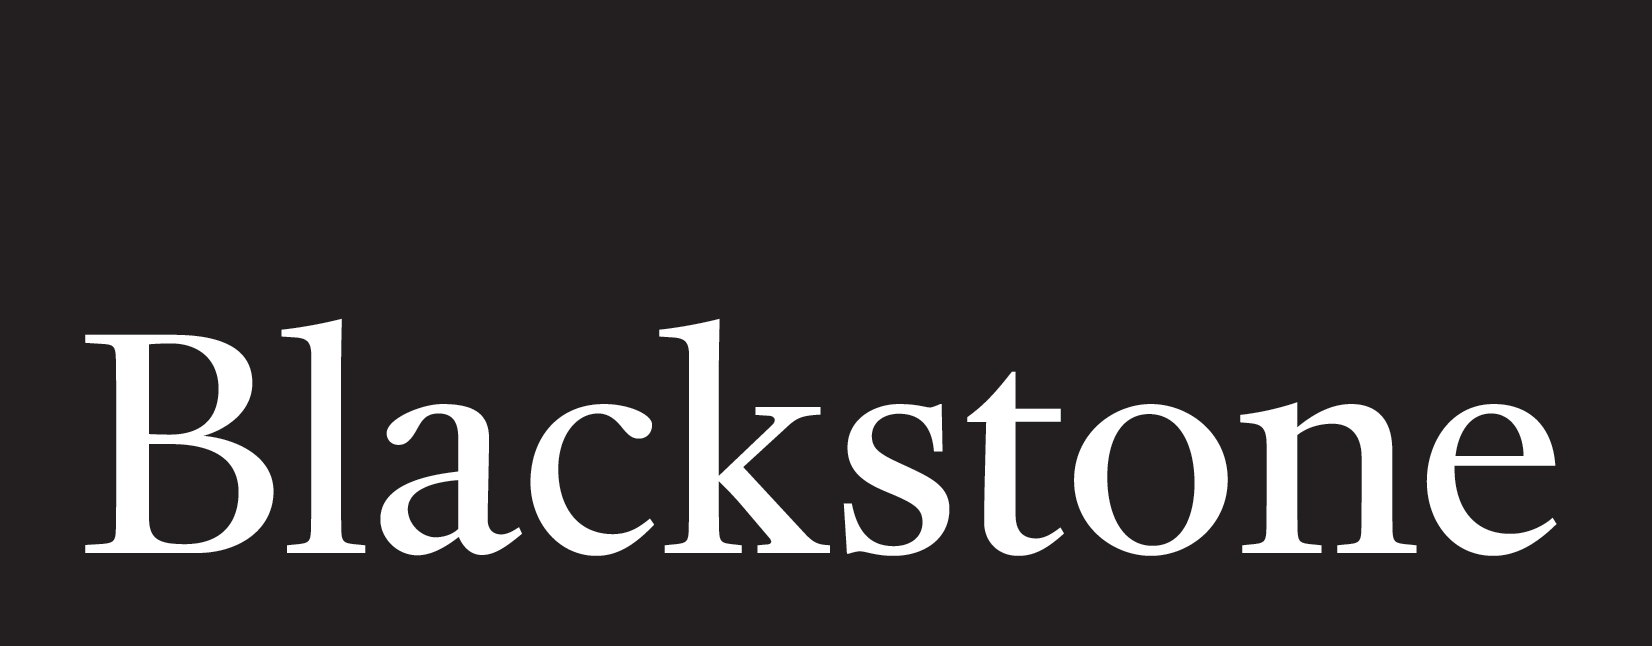 Blackstone.png